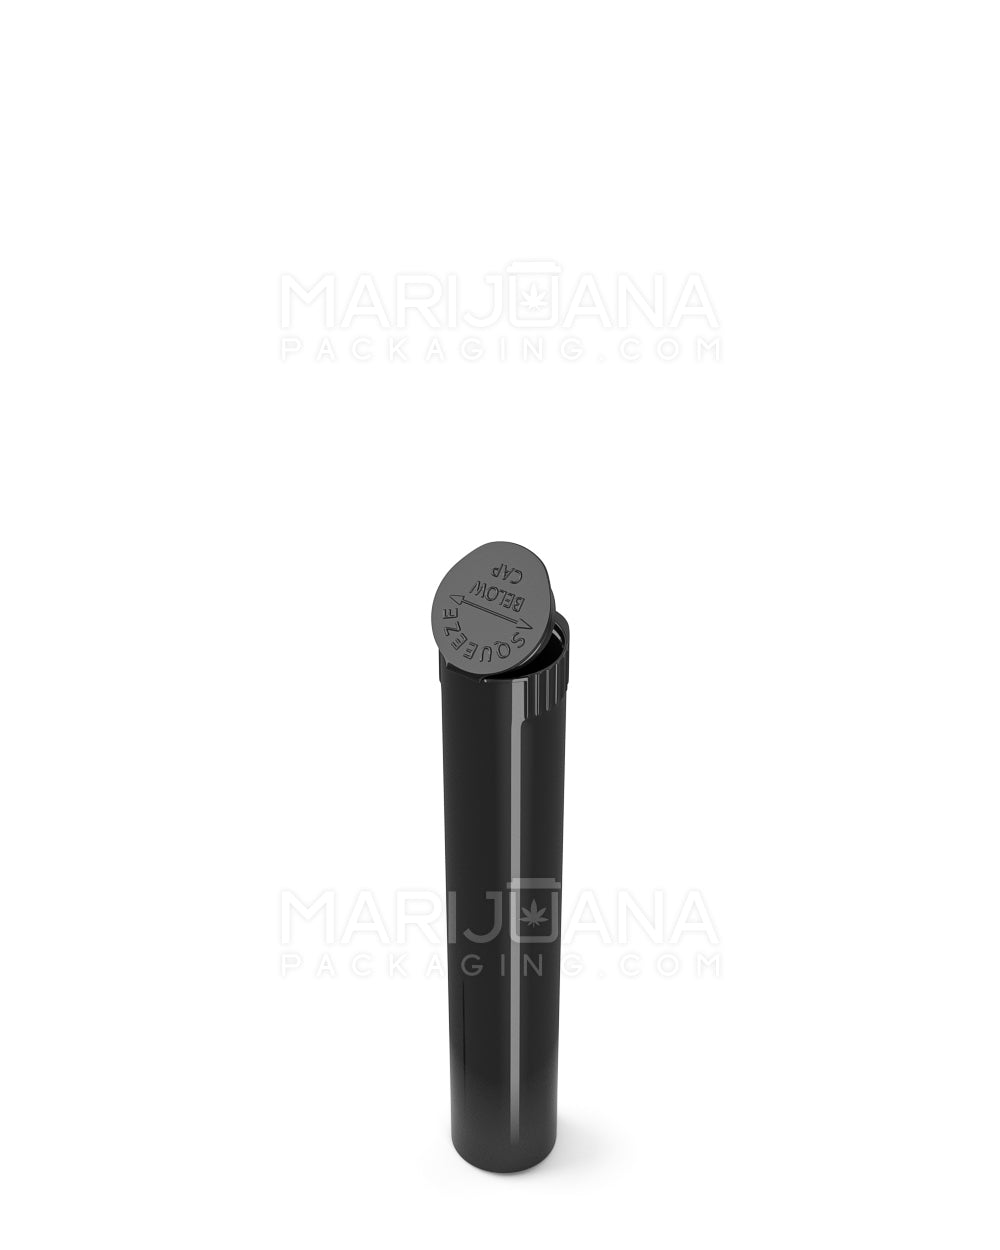 Child Resistant Pop Top Vape Cartridge Tube | 80mm - Black | Sample - 4